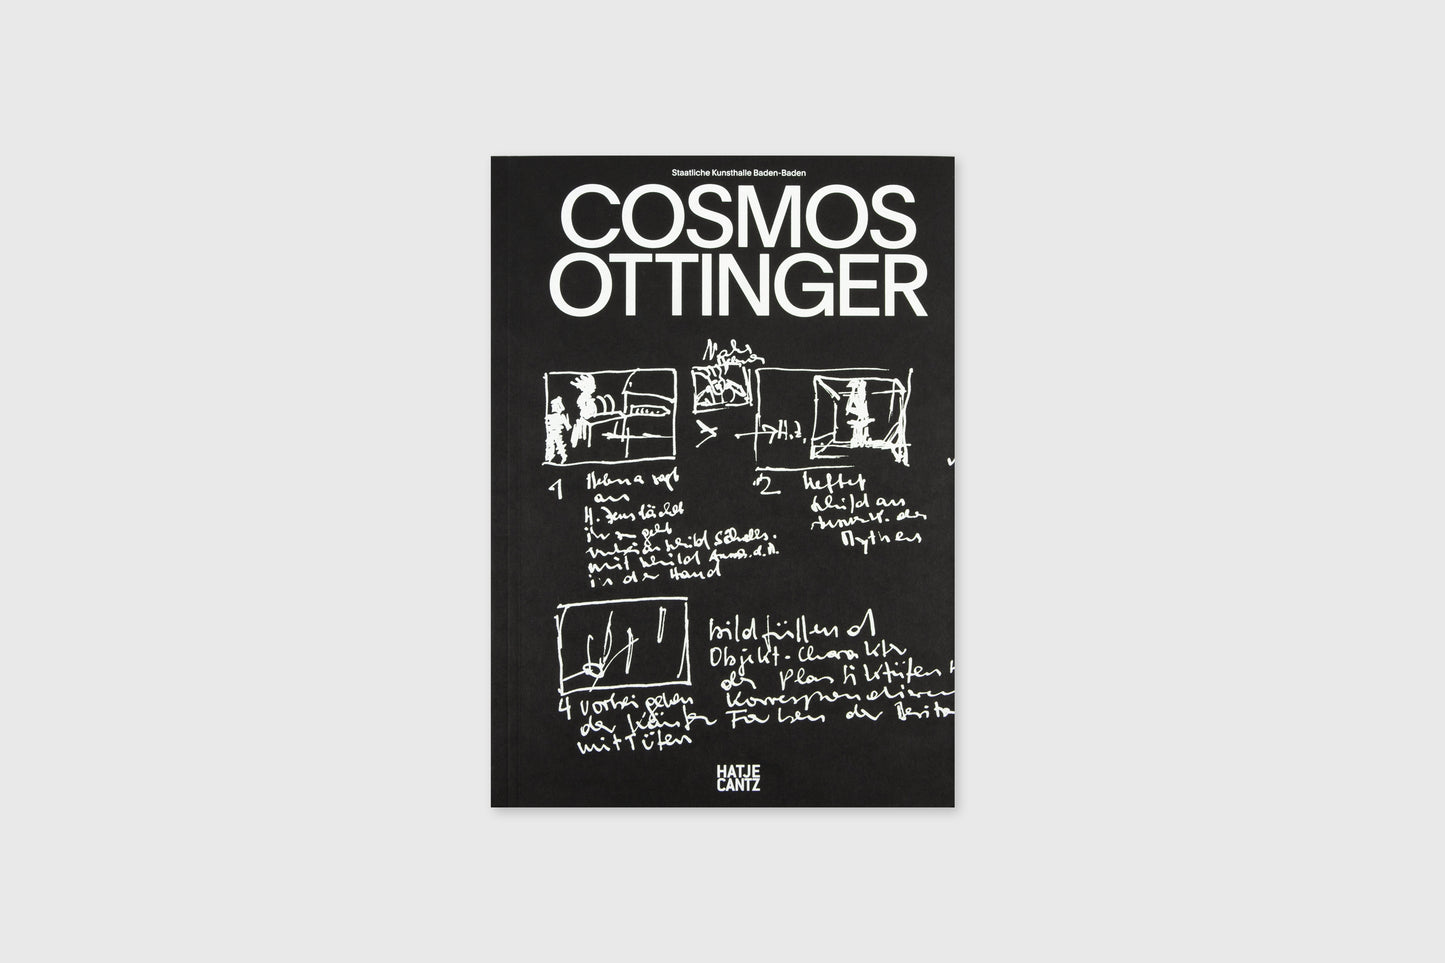 Cosmos Ottinger